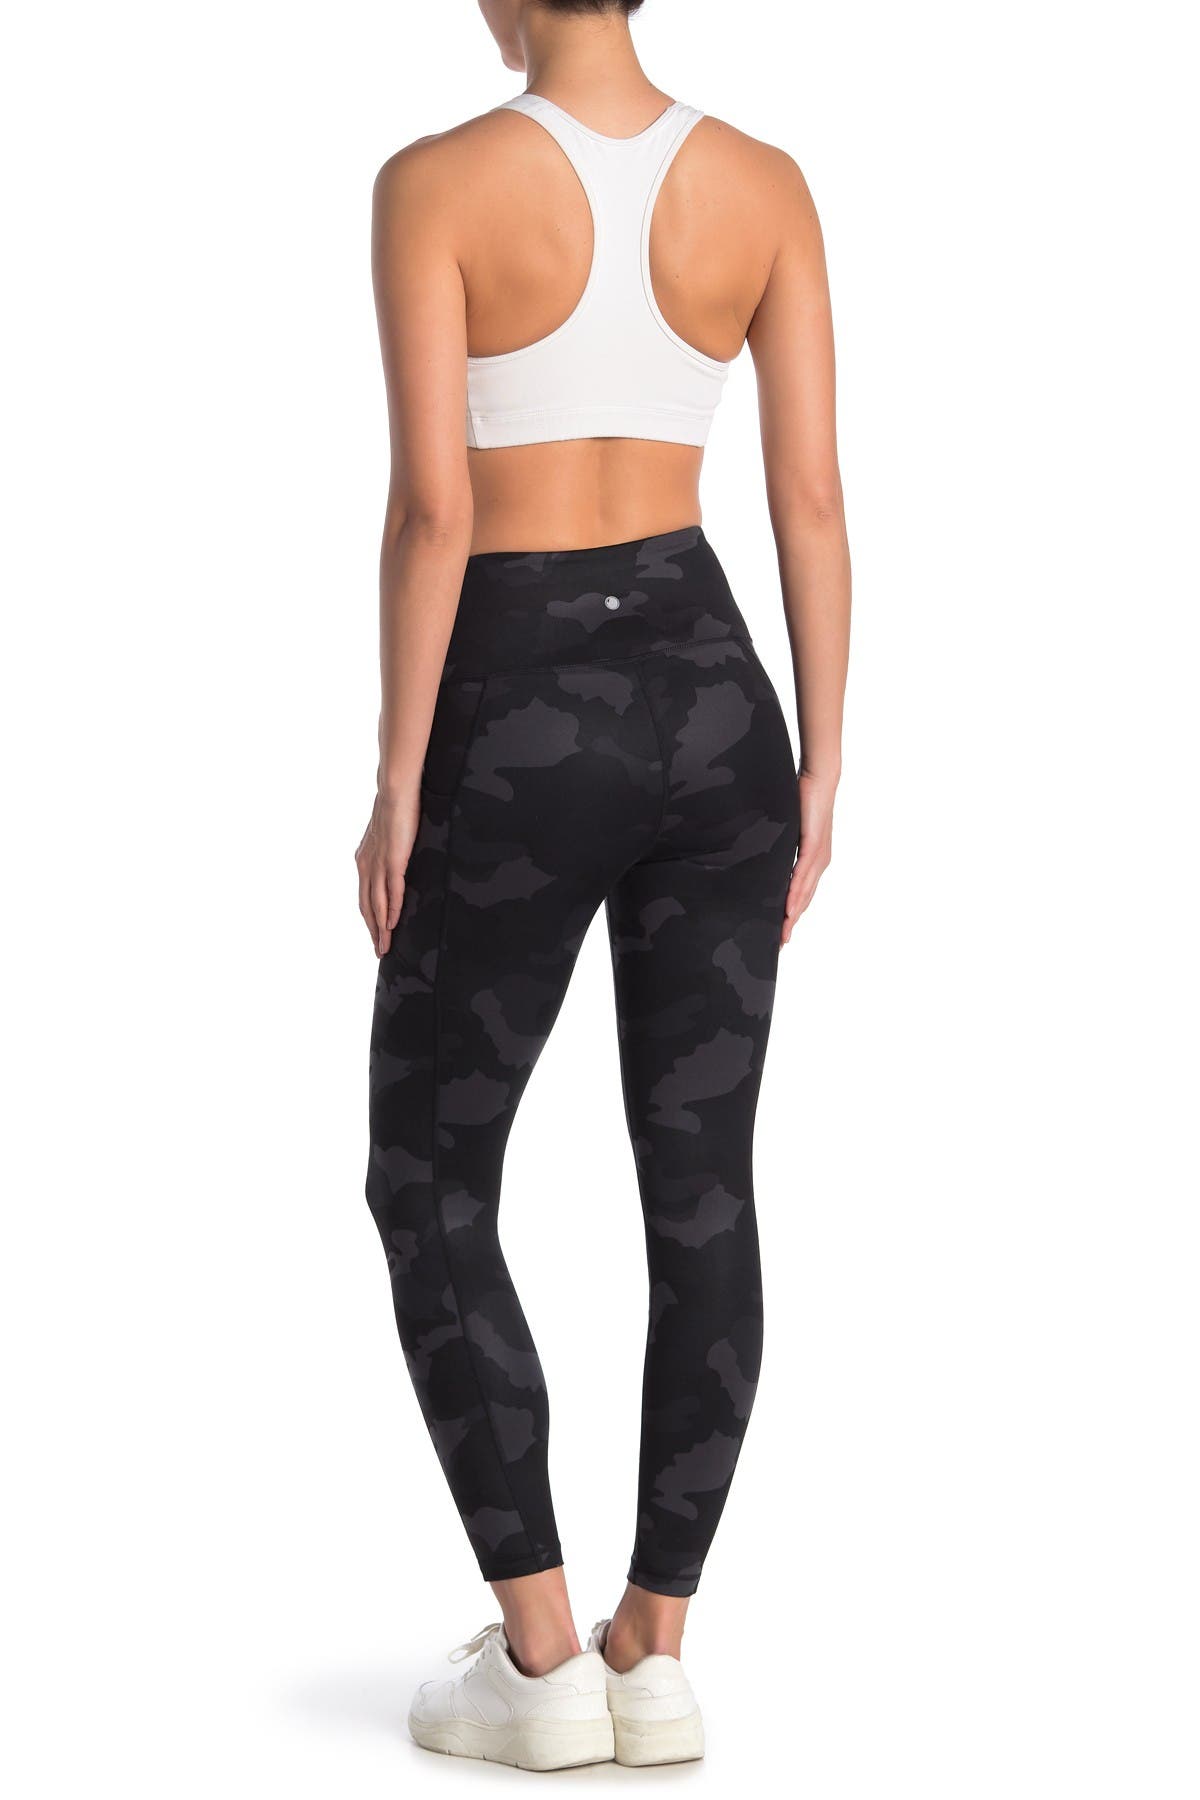 $78 Yogalicious Lux Women's Straight Leg Jogger Pant Black Pockets NWT Size  L